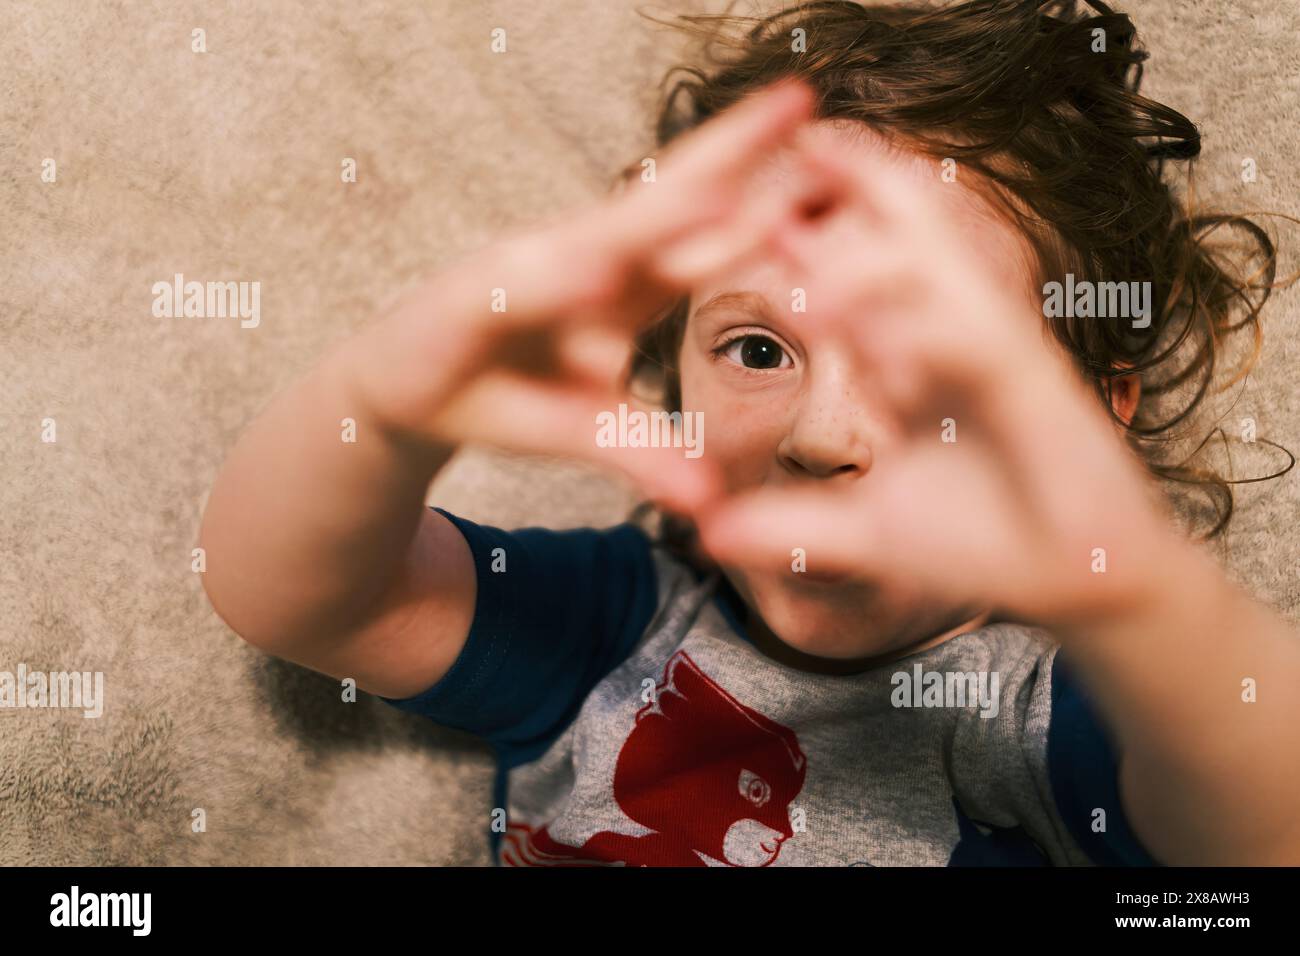 Child lying on carpet making hand heart gesture Stock Photo